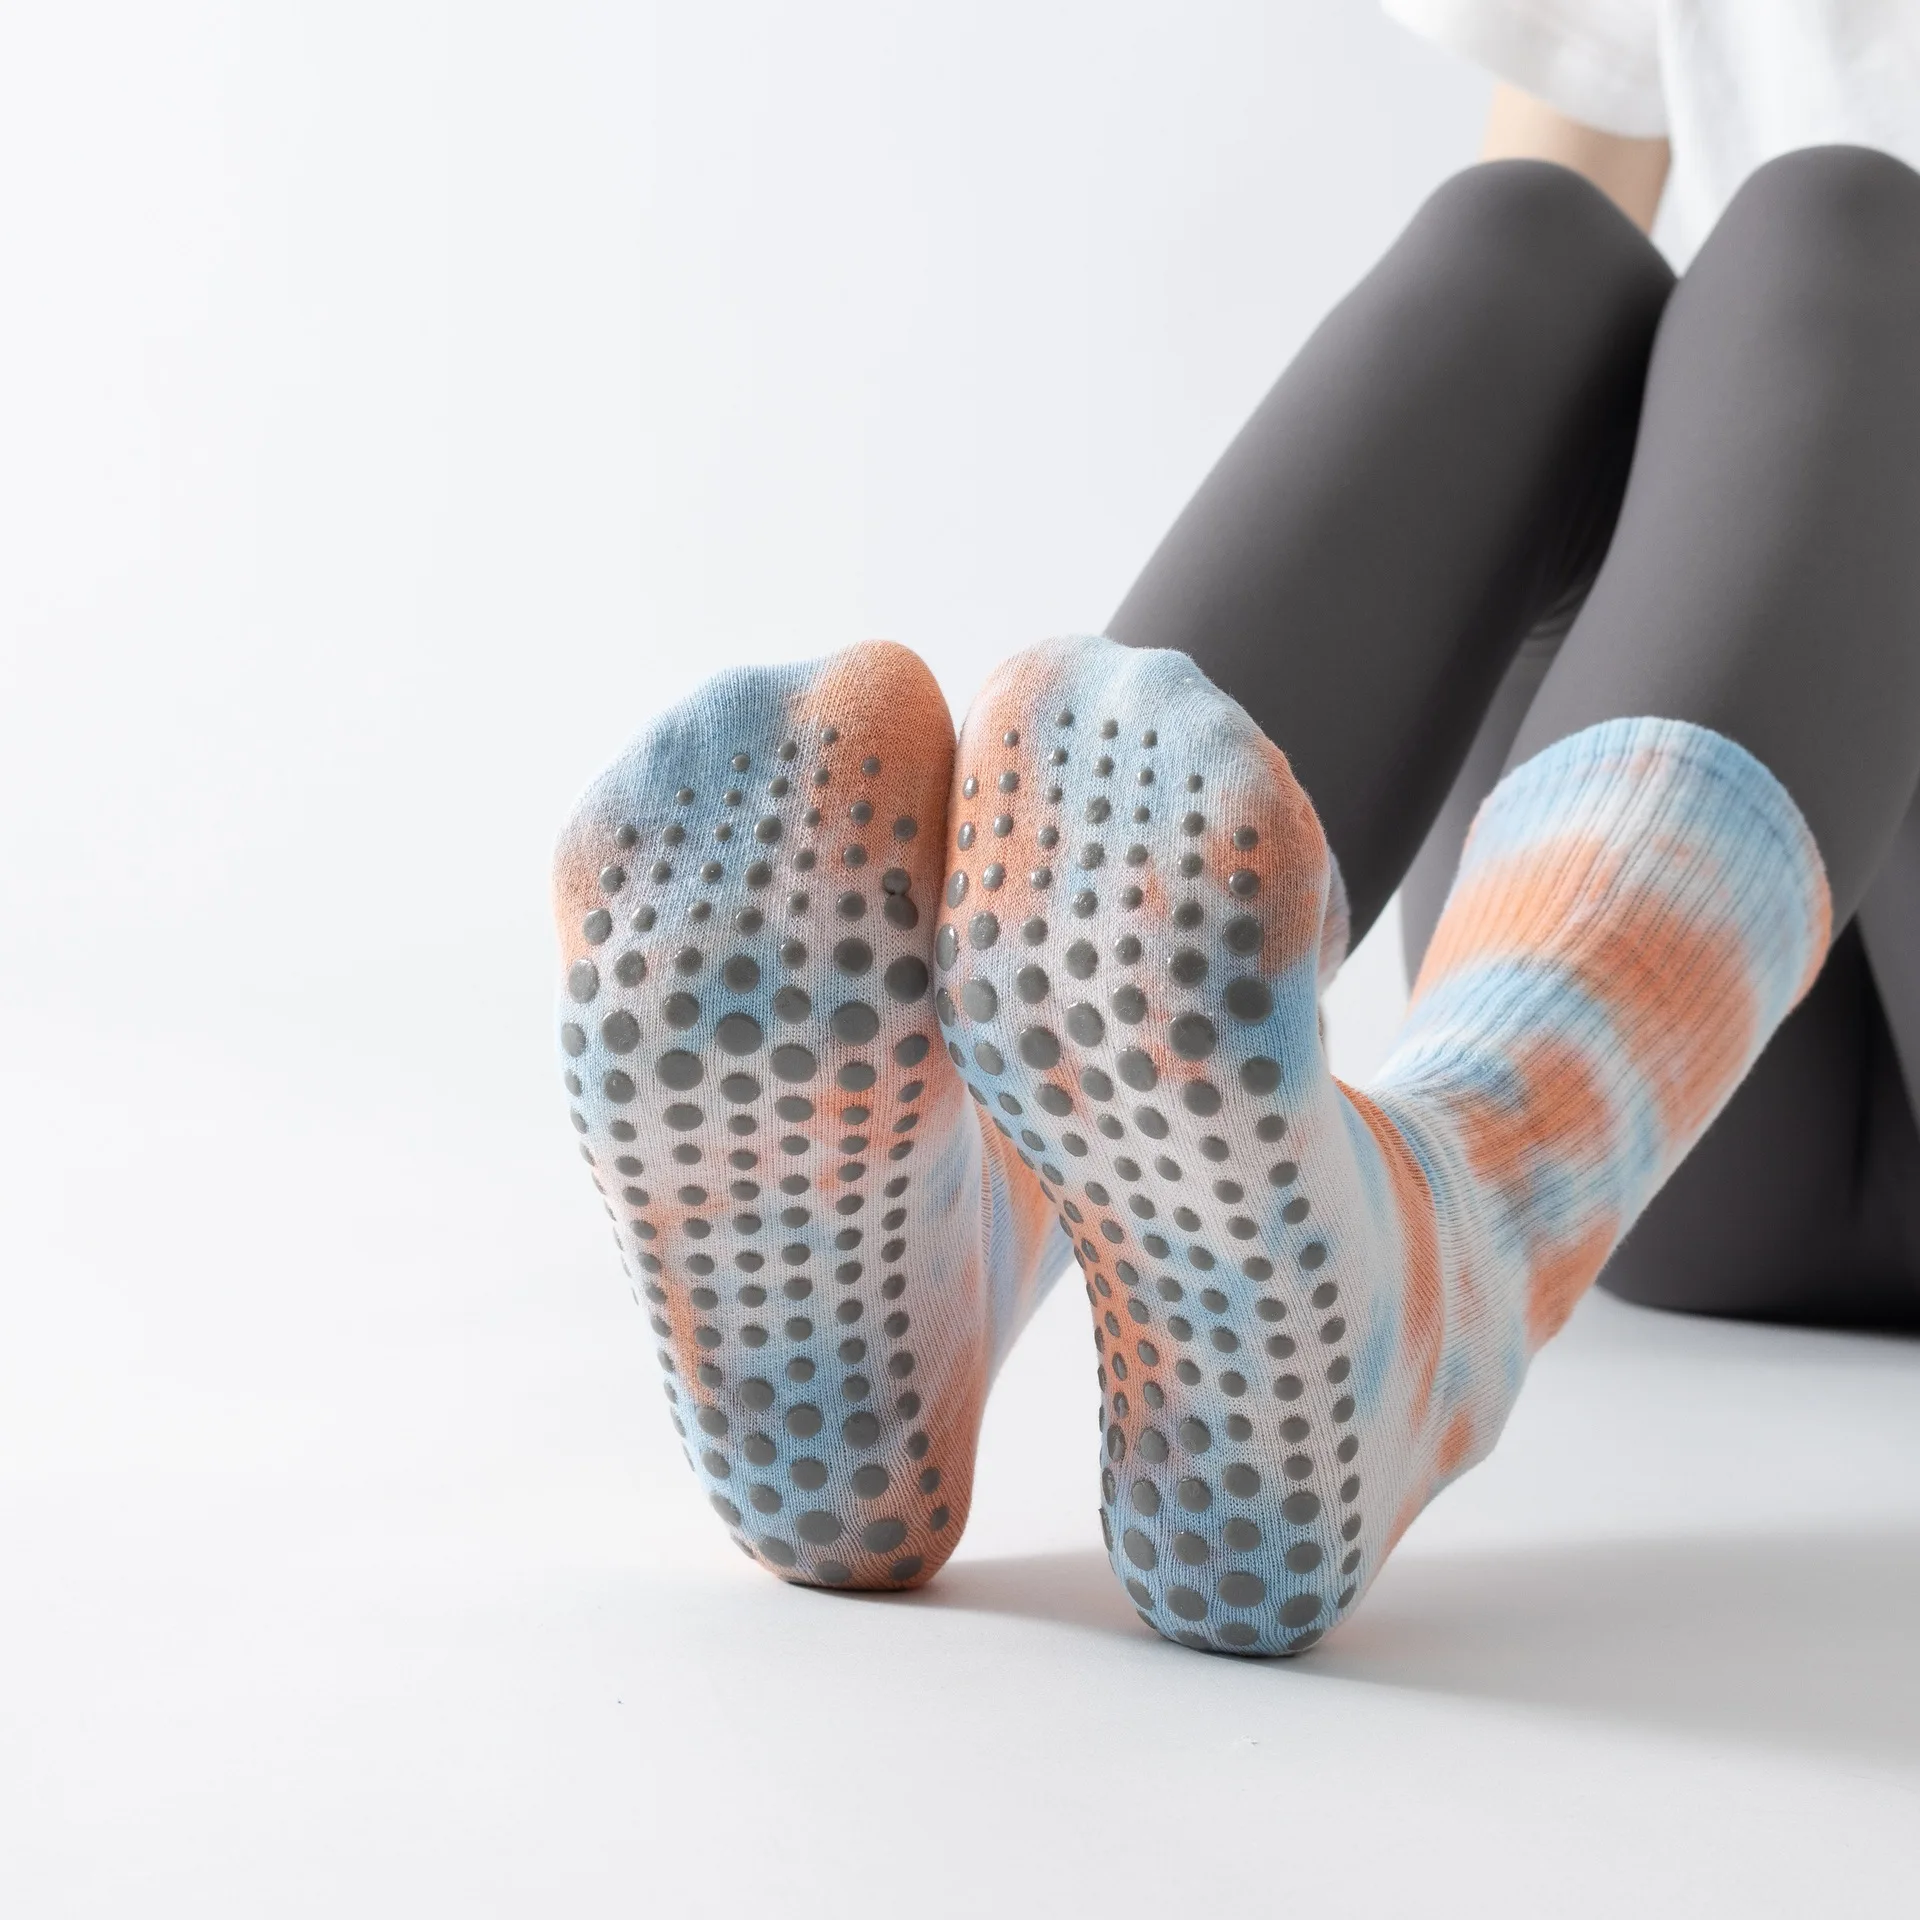 Women Female Pilates Yoga Yoga Socks Tie Dye Grip Socks Sport Yoga Socks  Anti Slip Pilates